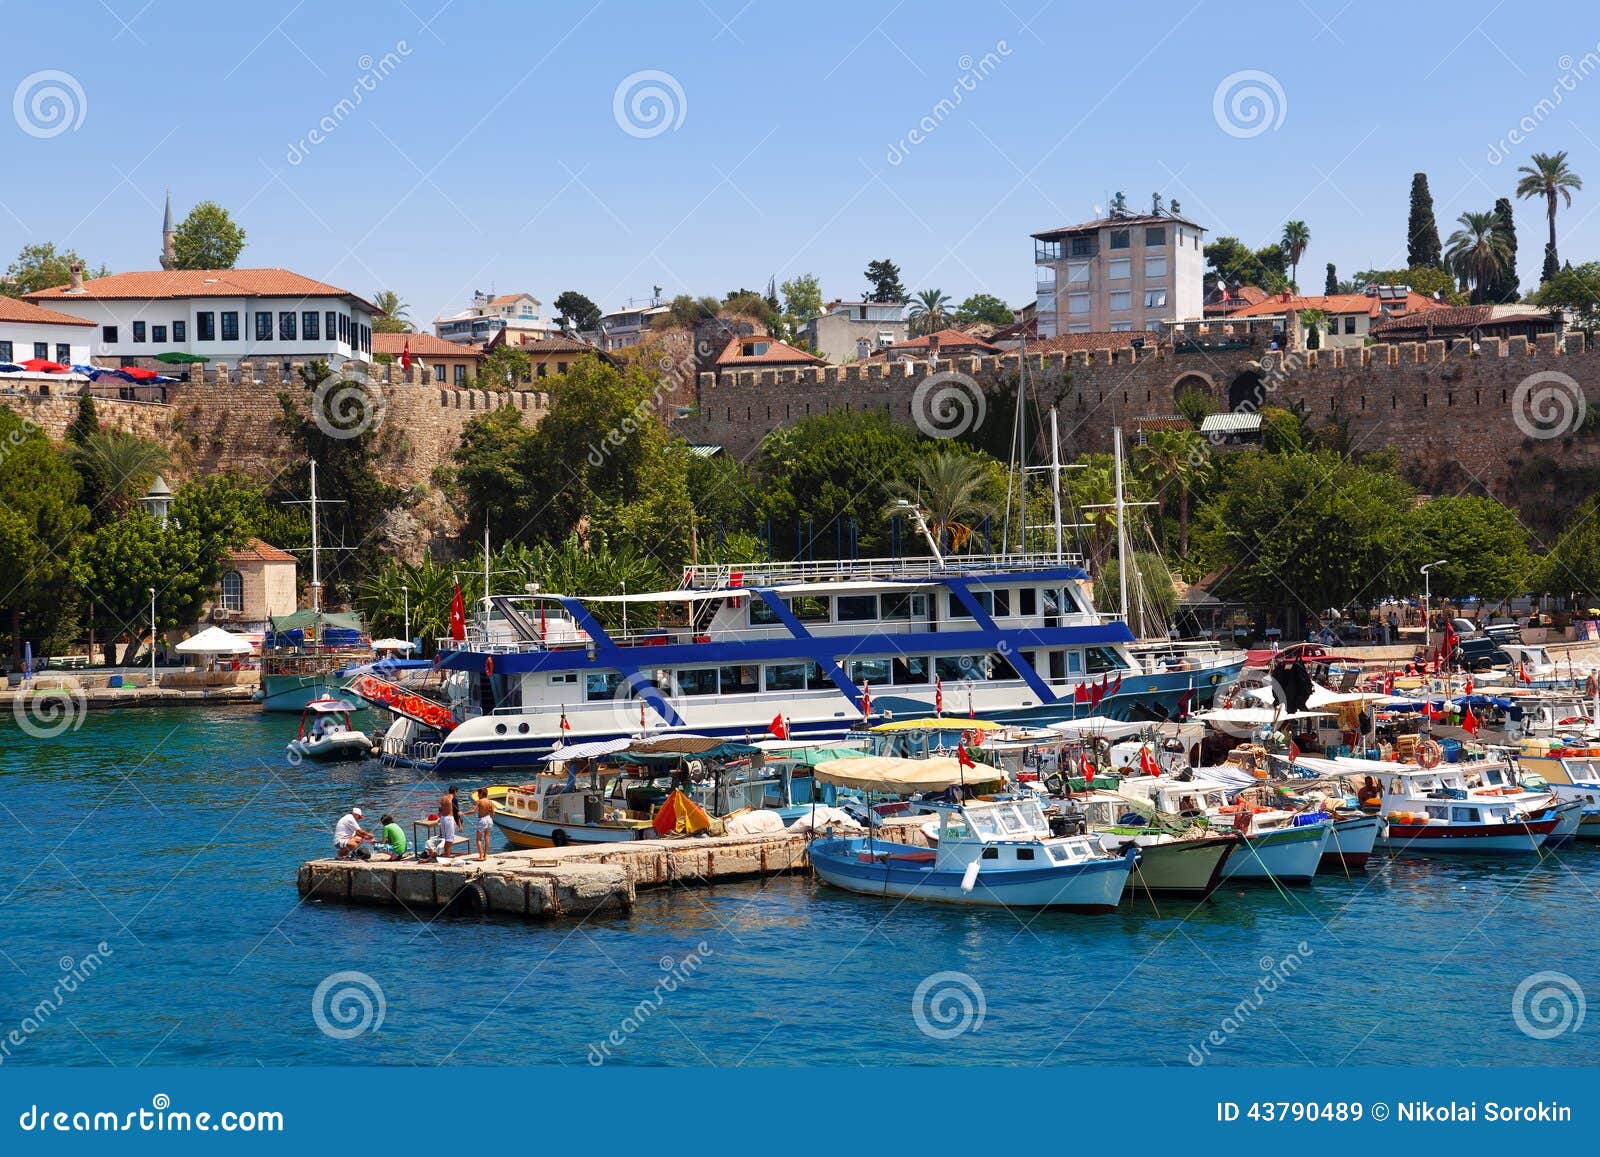 old harbour in antalya, turkey